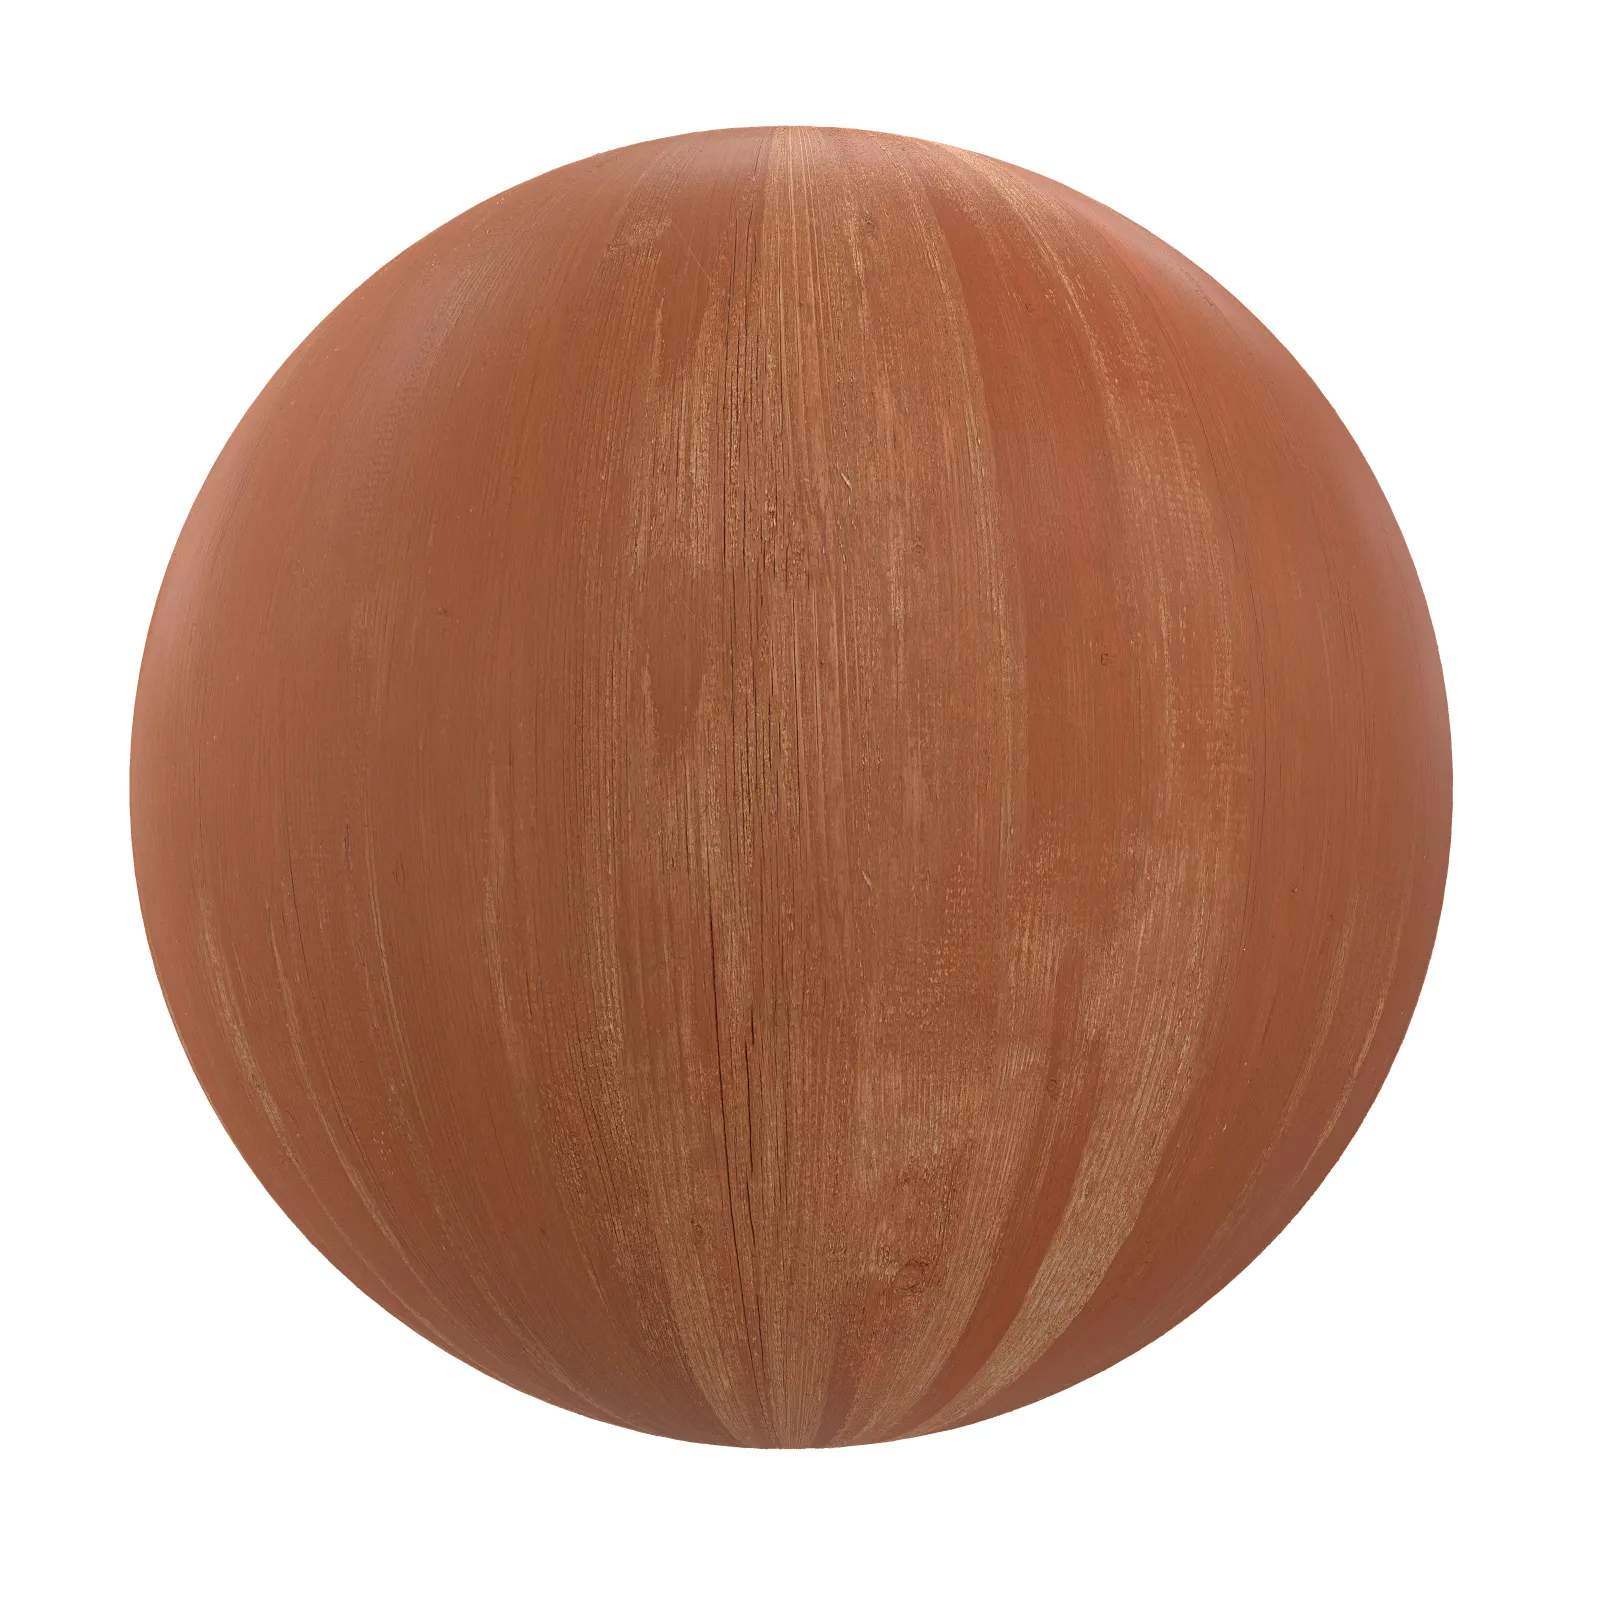 TEXTURES – WOOD – Orange Painted Wood 2